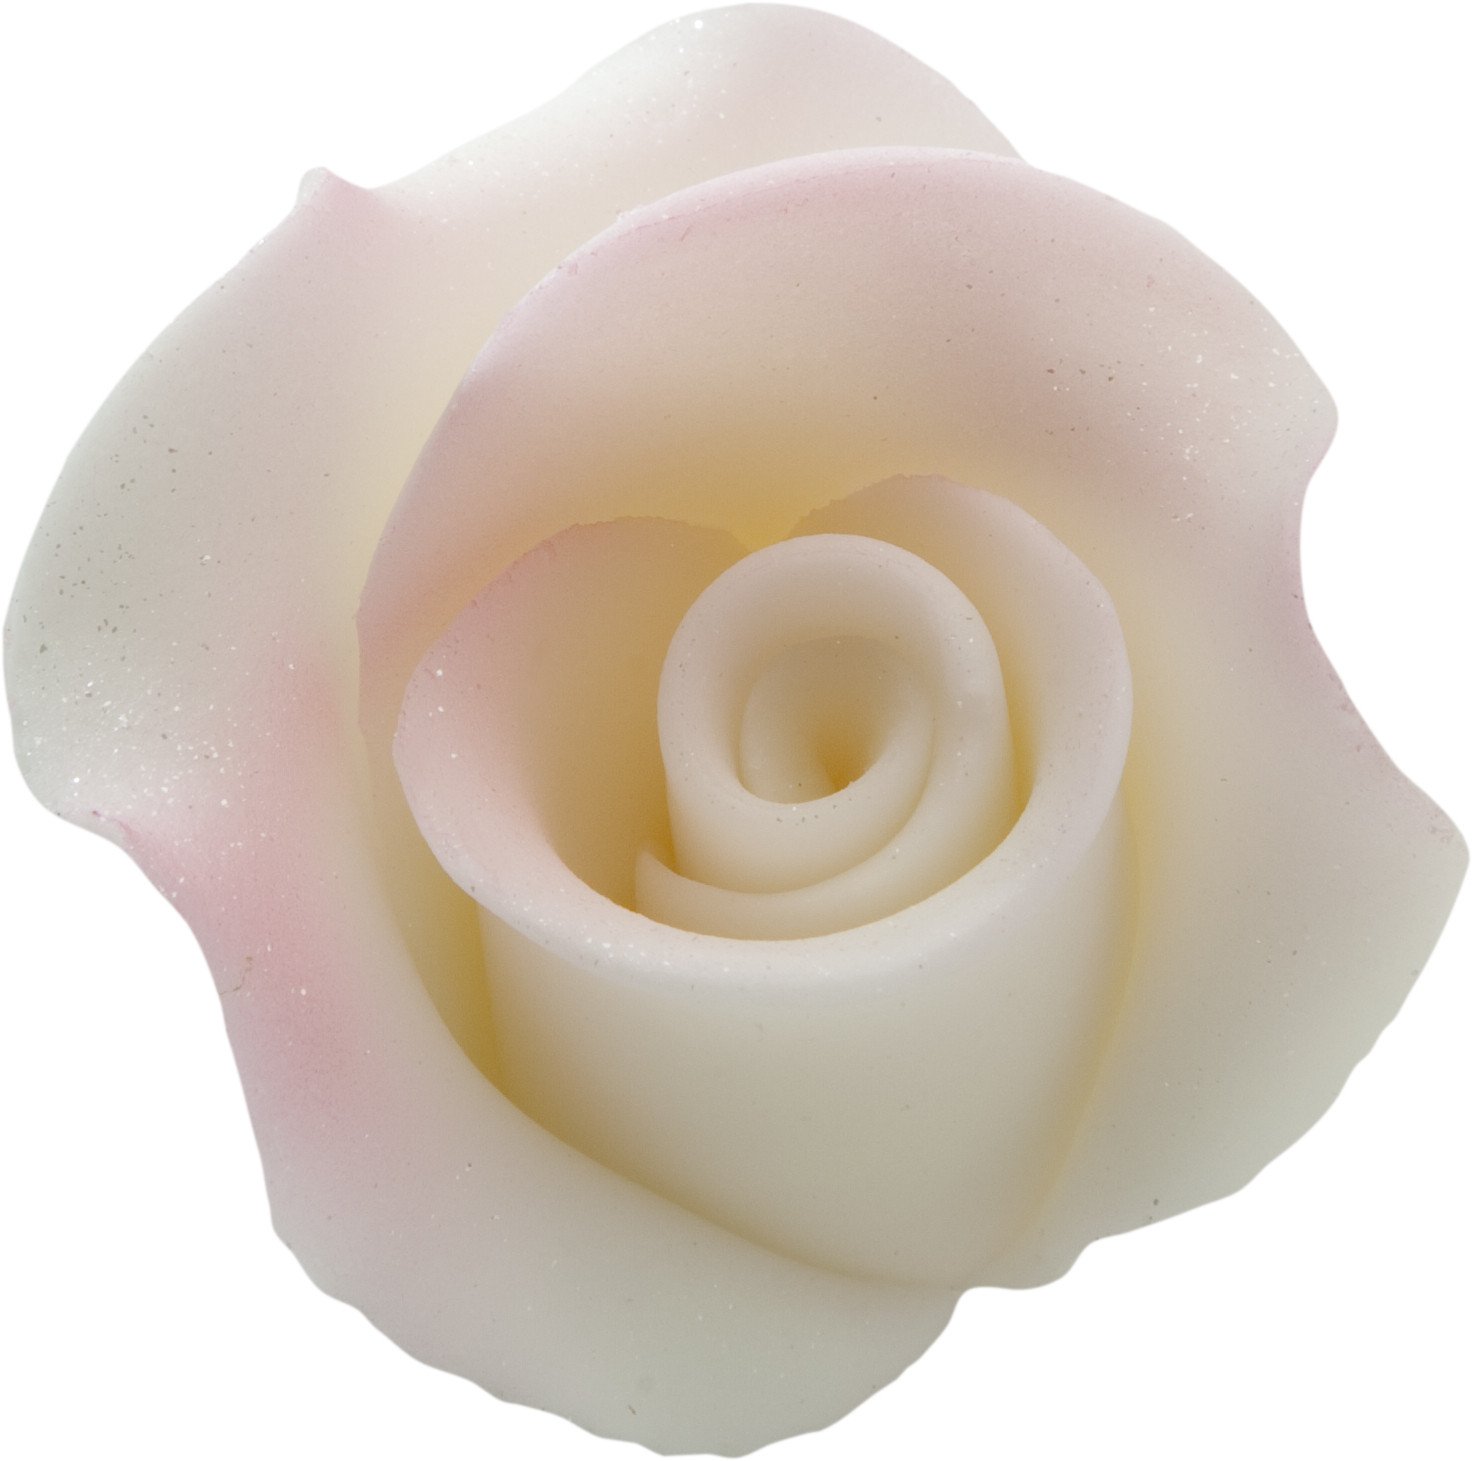 Trandafir din zahar mediu alb roz umbrit 051300/c03 PJT, set 20 buc